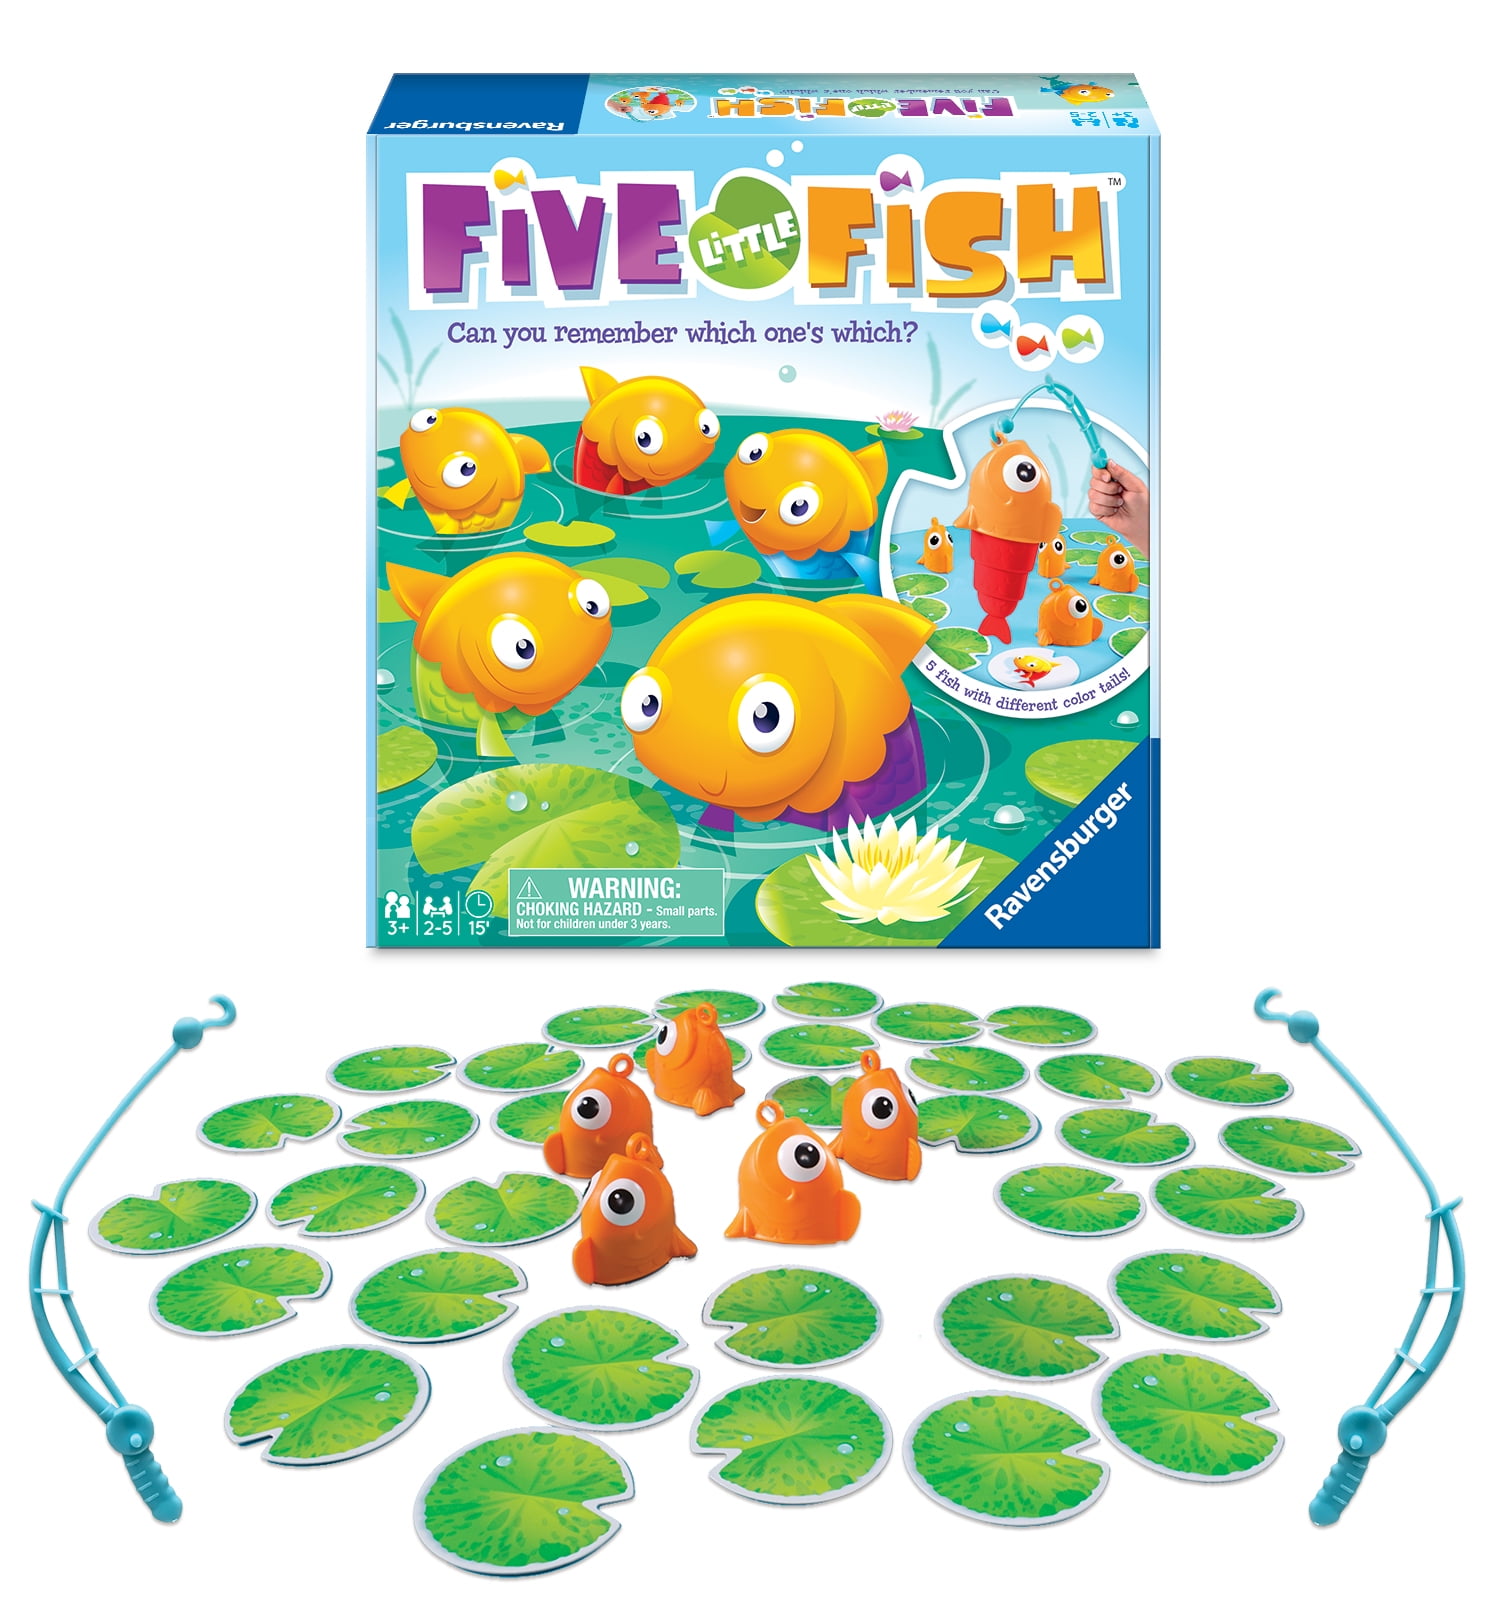 Ravensburger Five Little Fish Game for Preschoolers